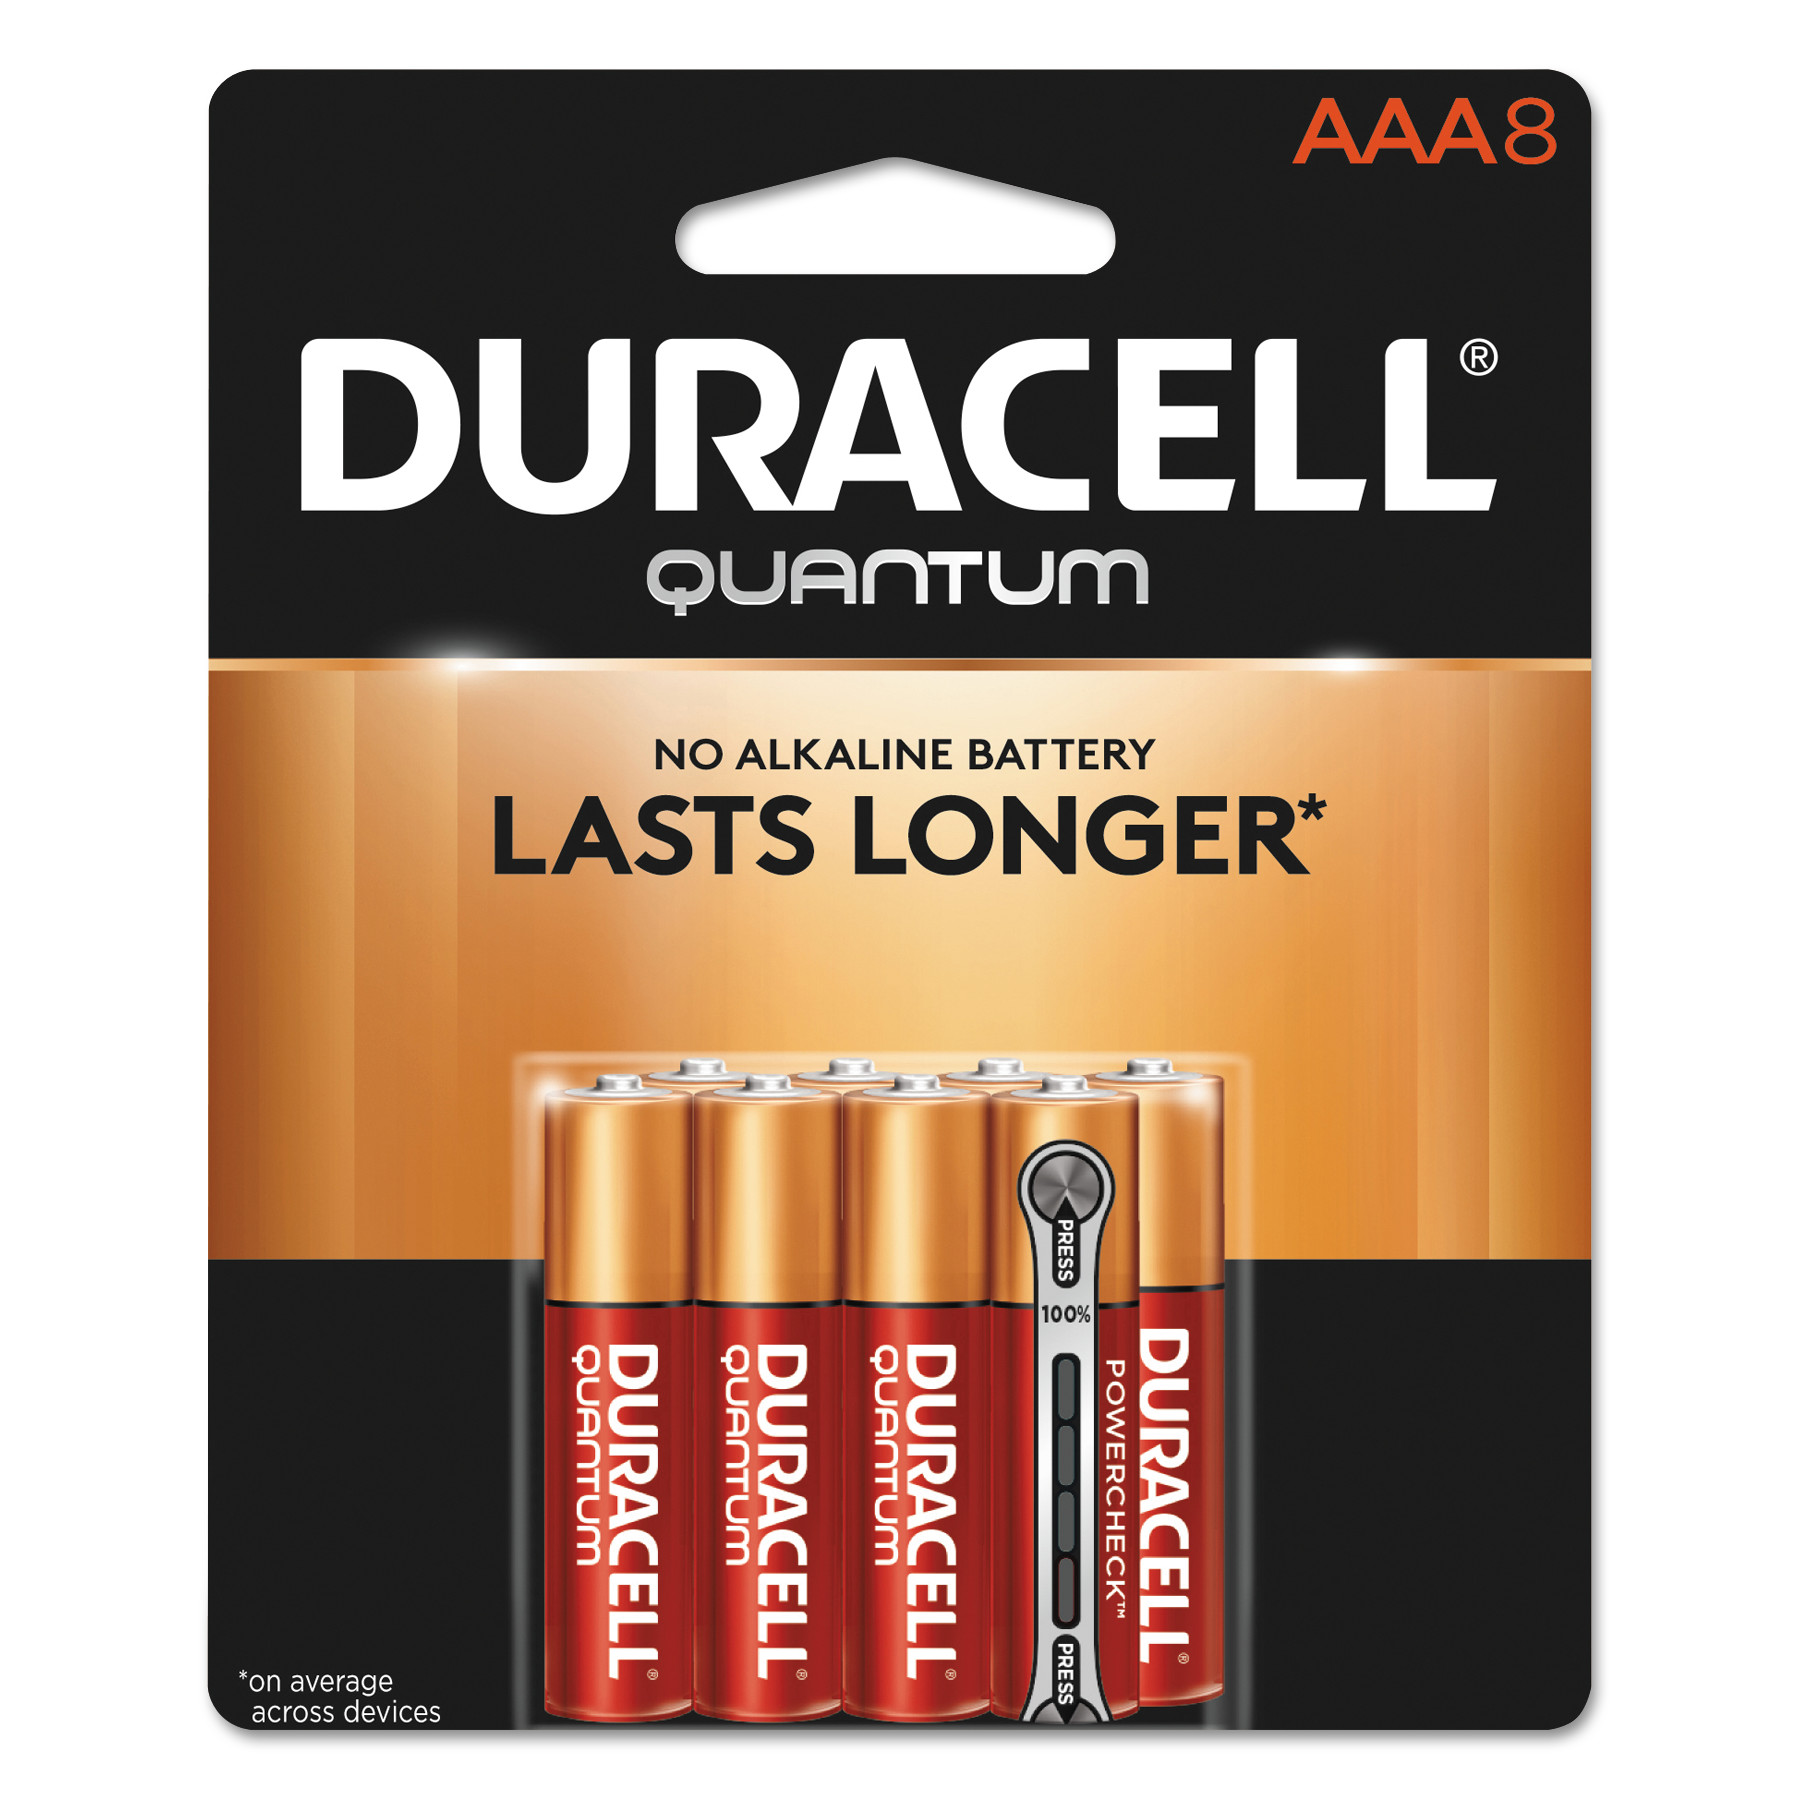  Duracell QU2400B8Z Quantum Alkaline AAA Batteries, 8/Pack (DURQU2400B8Z) 